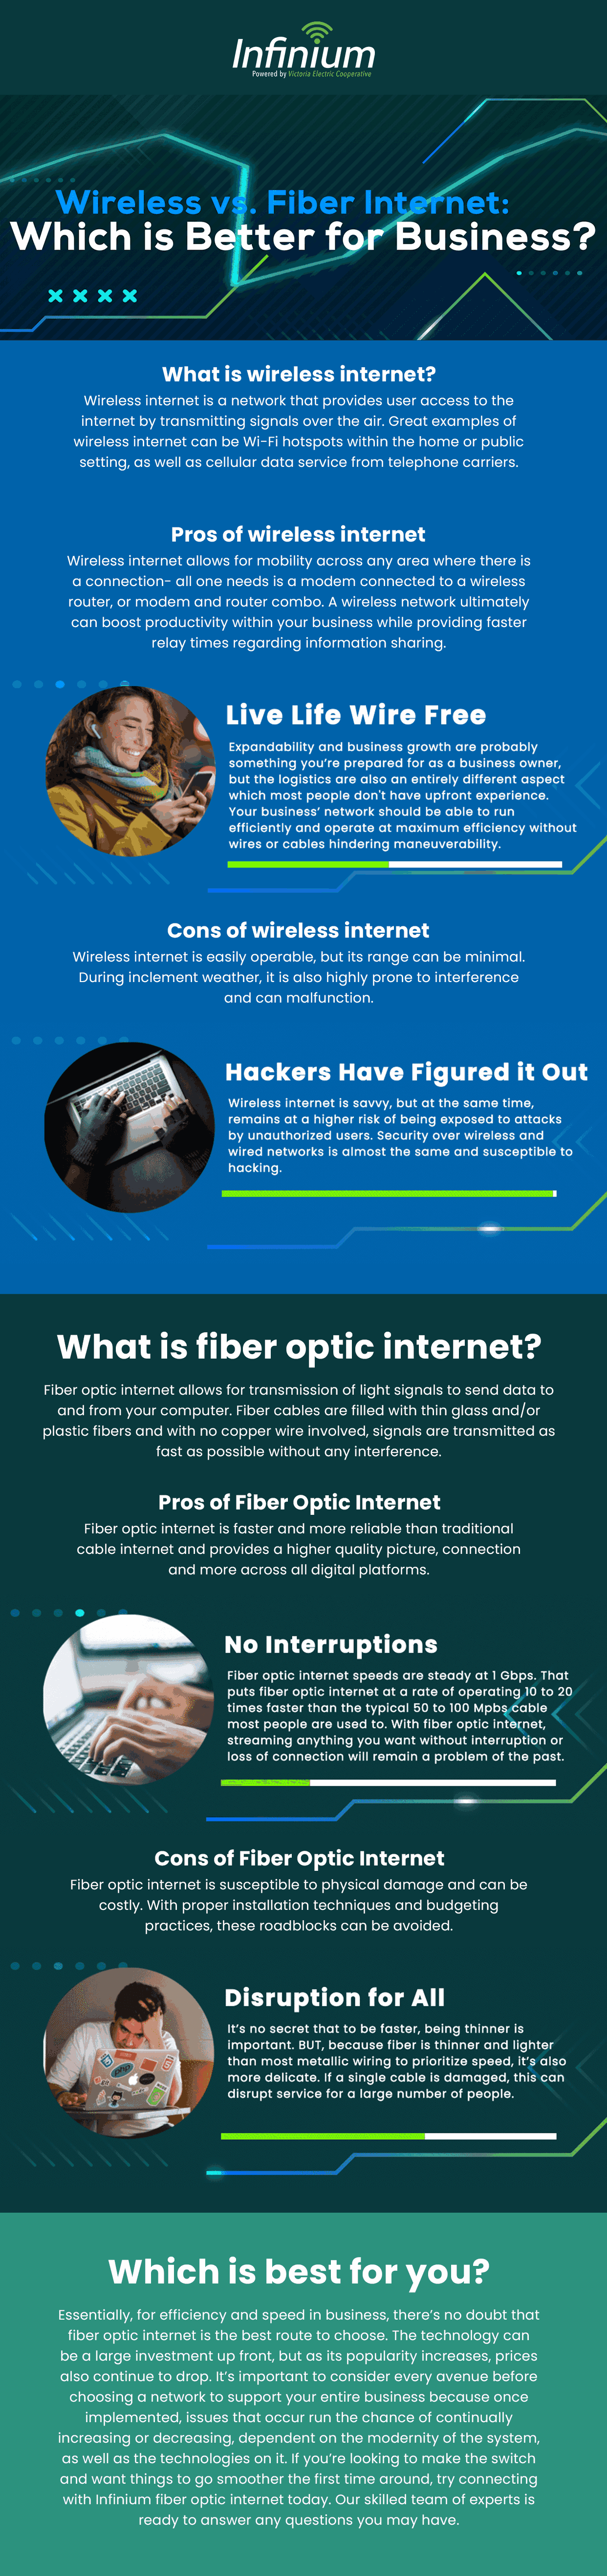 fiber optic internet for business